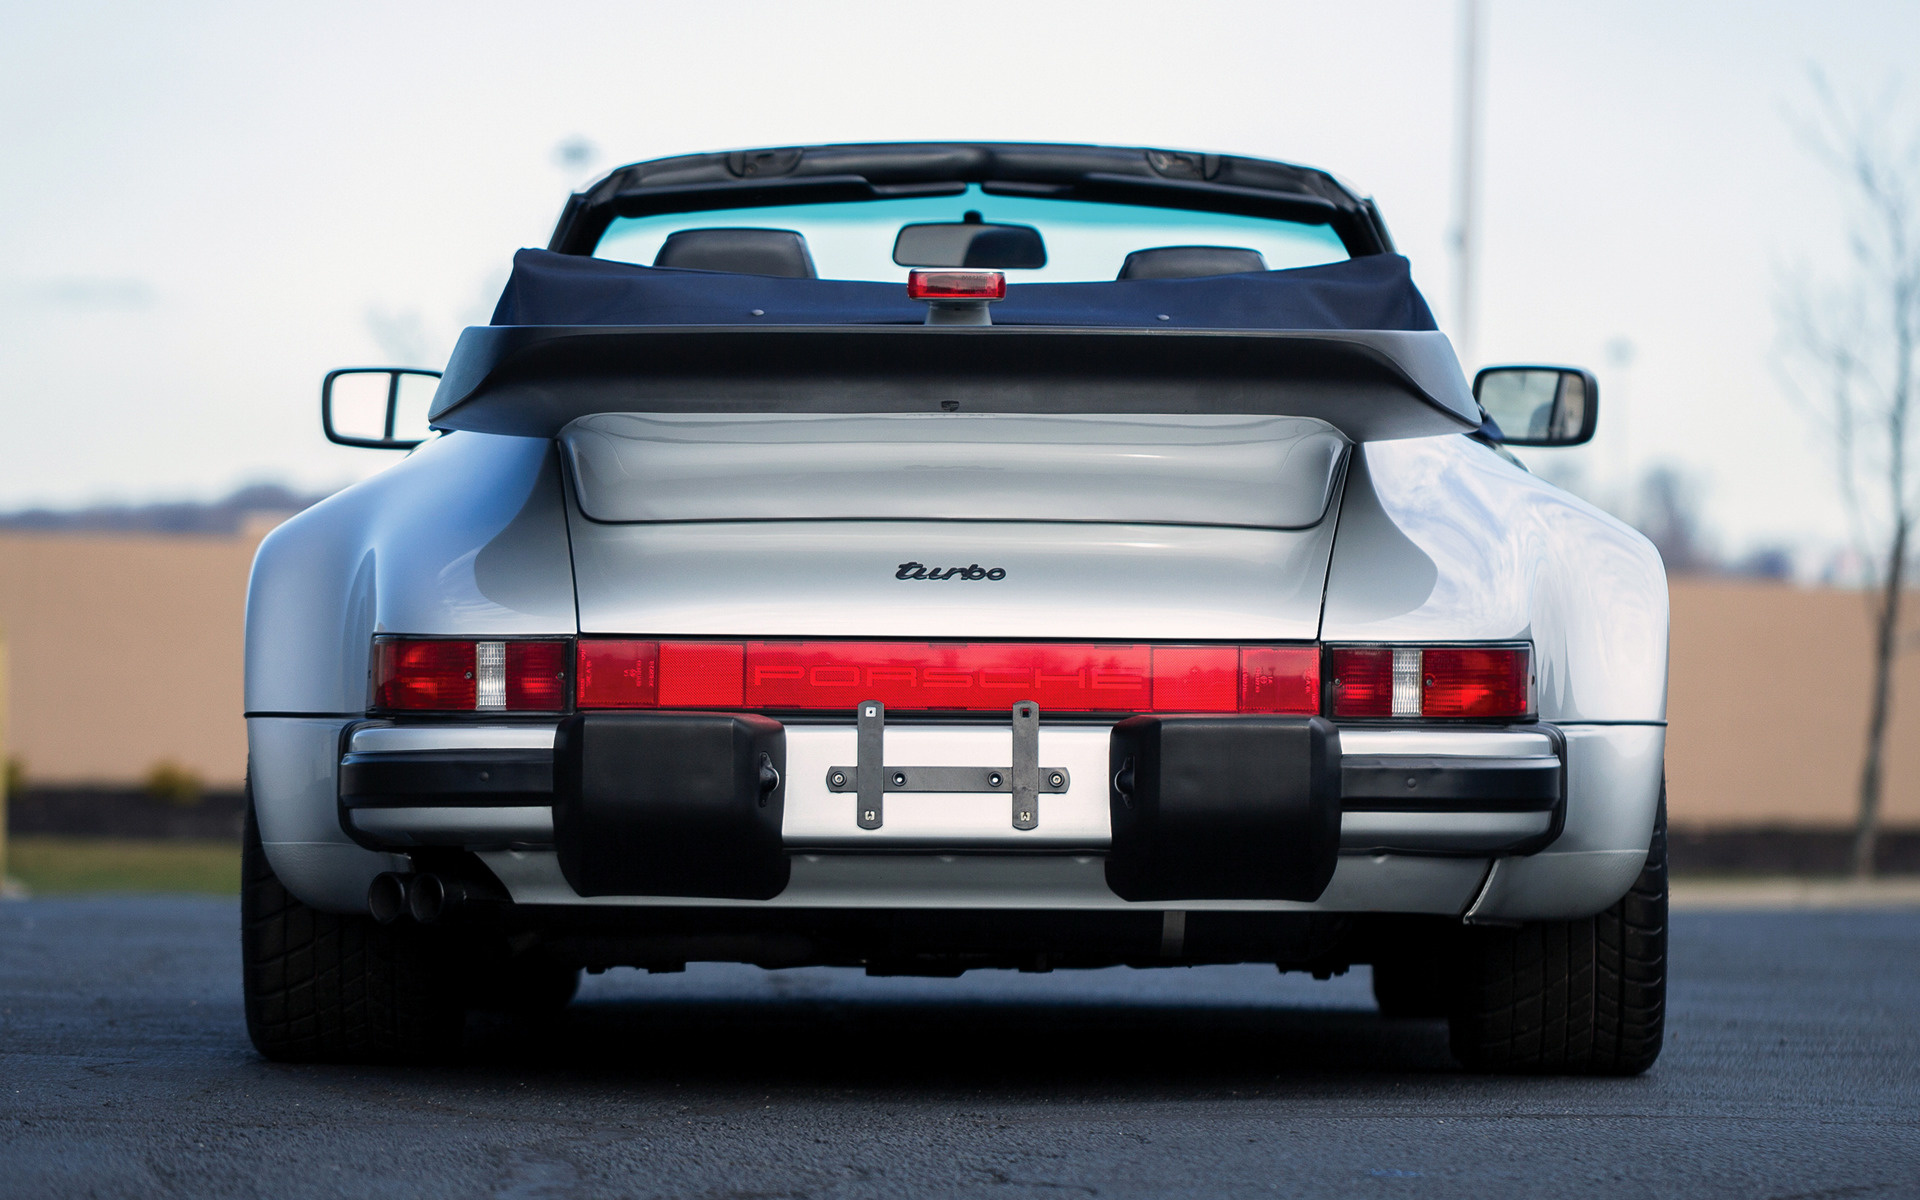 1987 Porsche 911 Turbo Cabriolet Slantnose Us Achtergronden En Hd Wallpaper Car Pixel